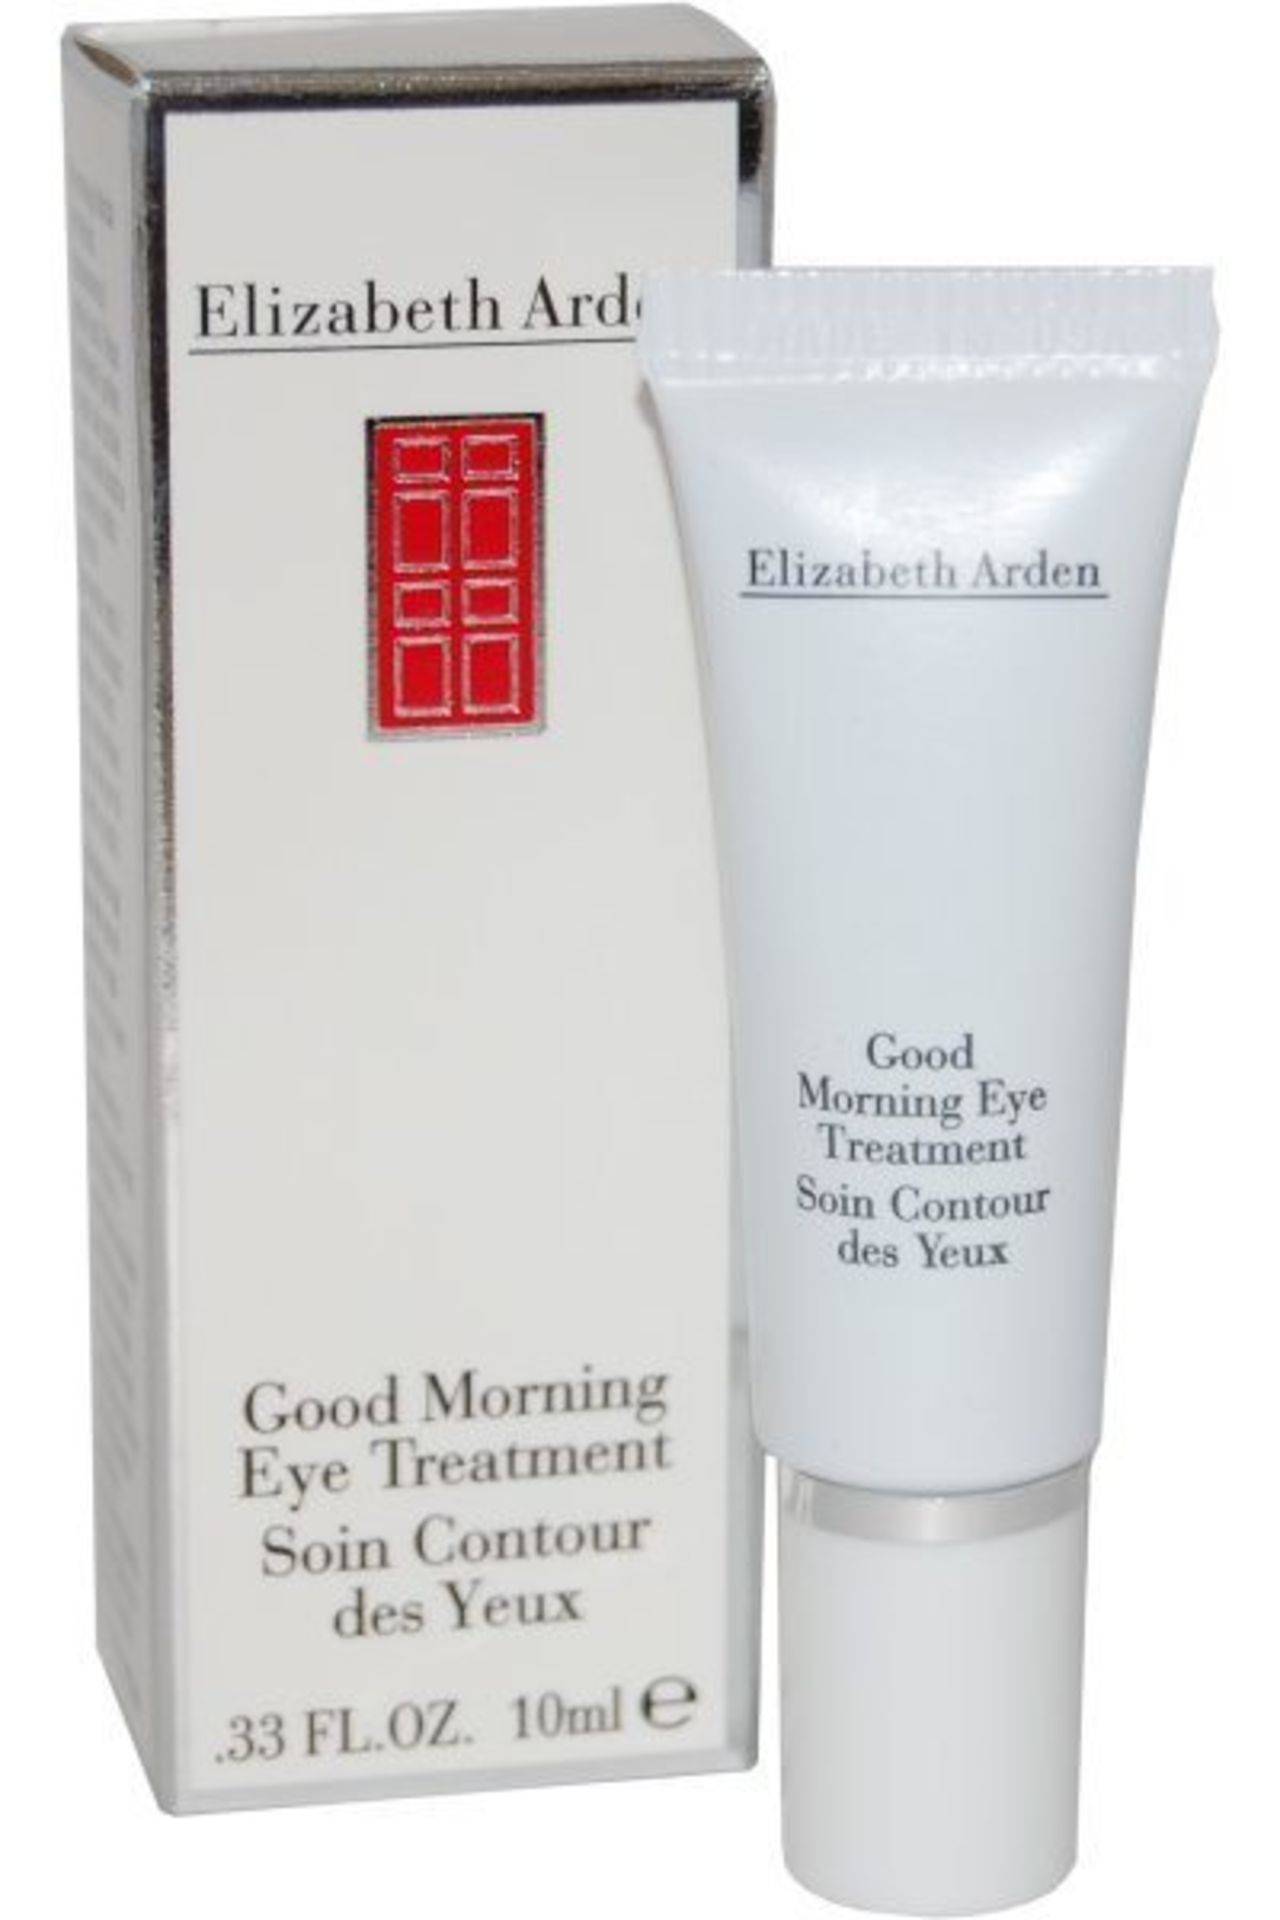 V Brand New Elizabeth Arden Good Morning Eye Treatment RRP £22.00 X 2 YOUR BID PRICE TO BE